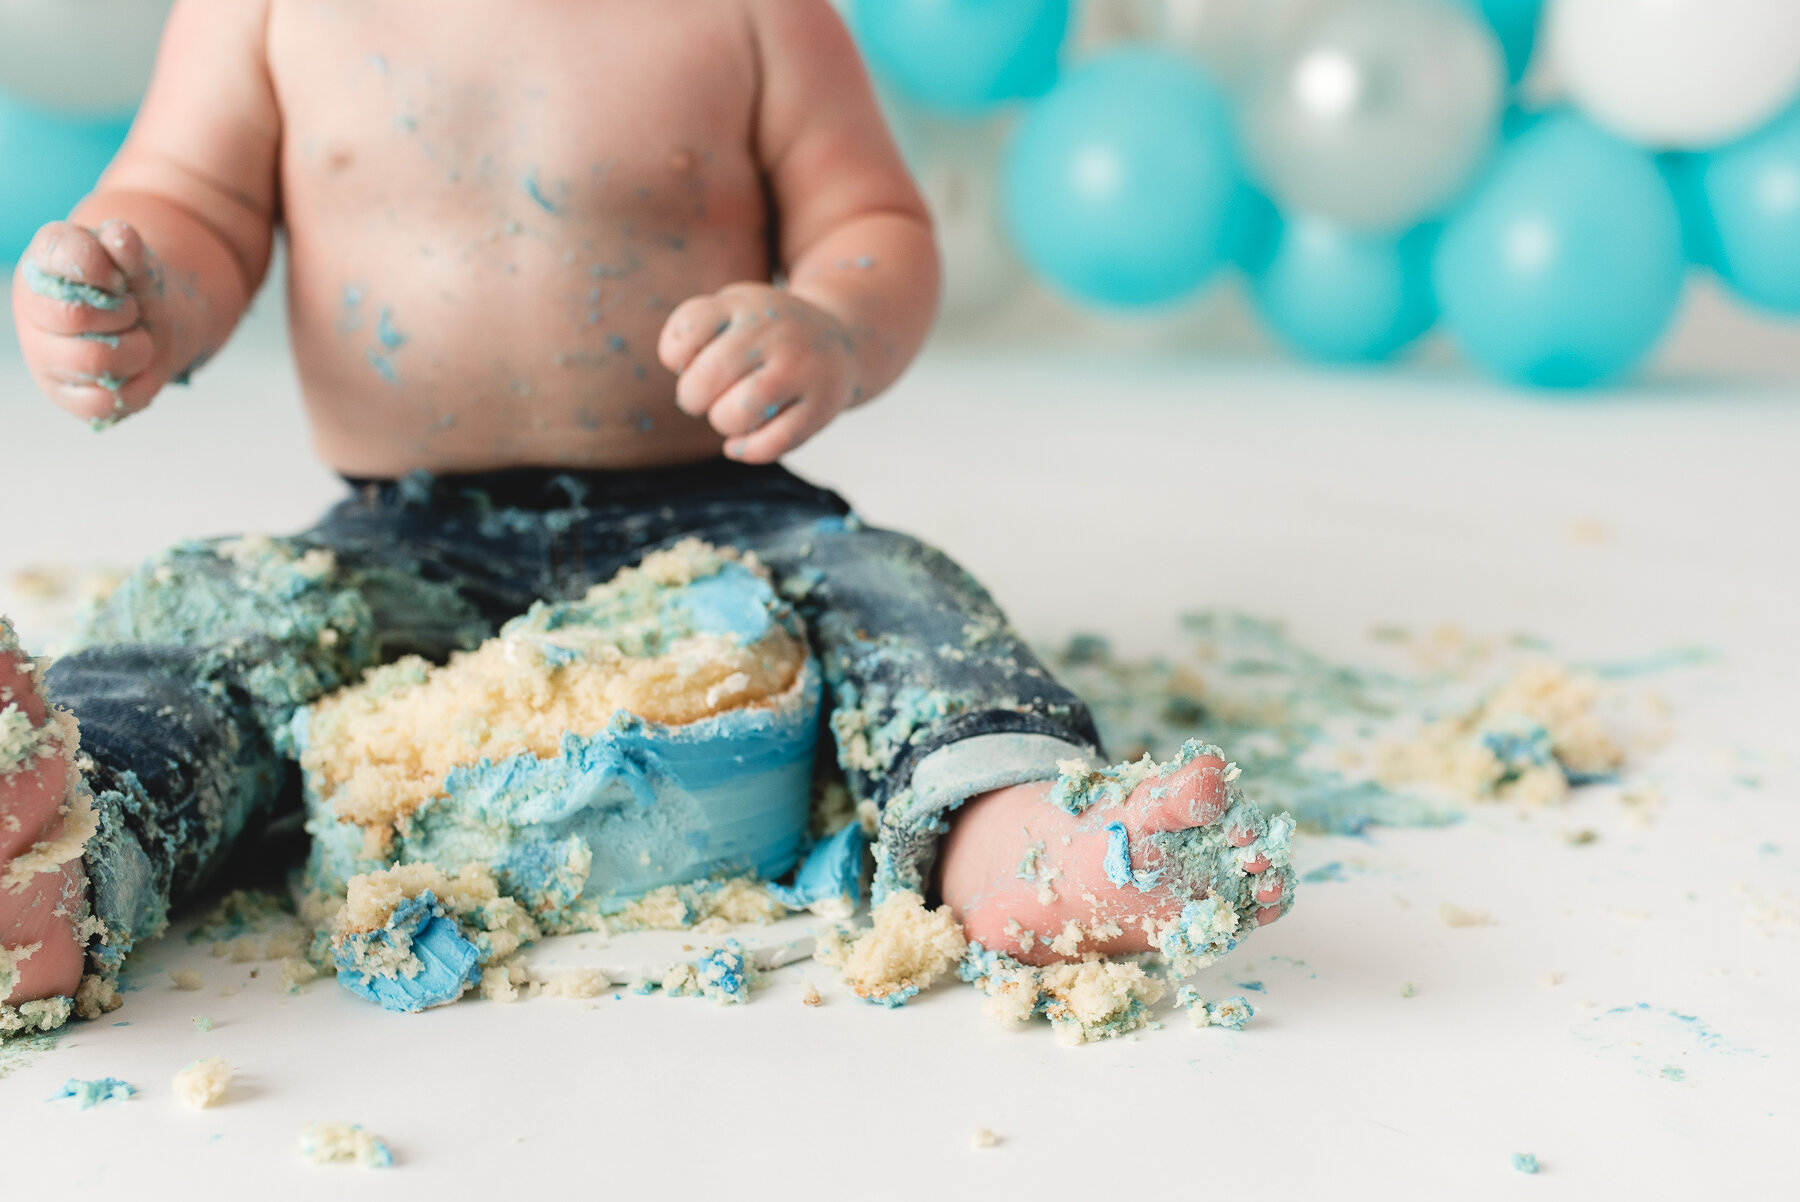 Buffalo Family maternity cake smash newborn Photographer-19.jpg